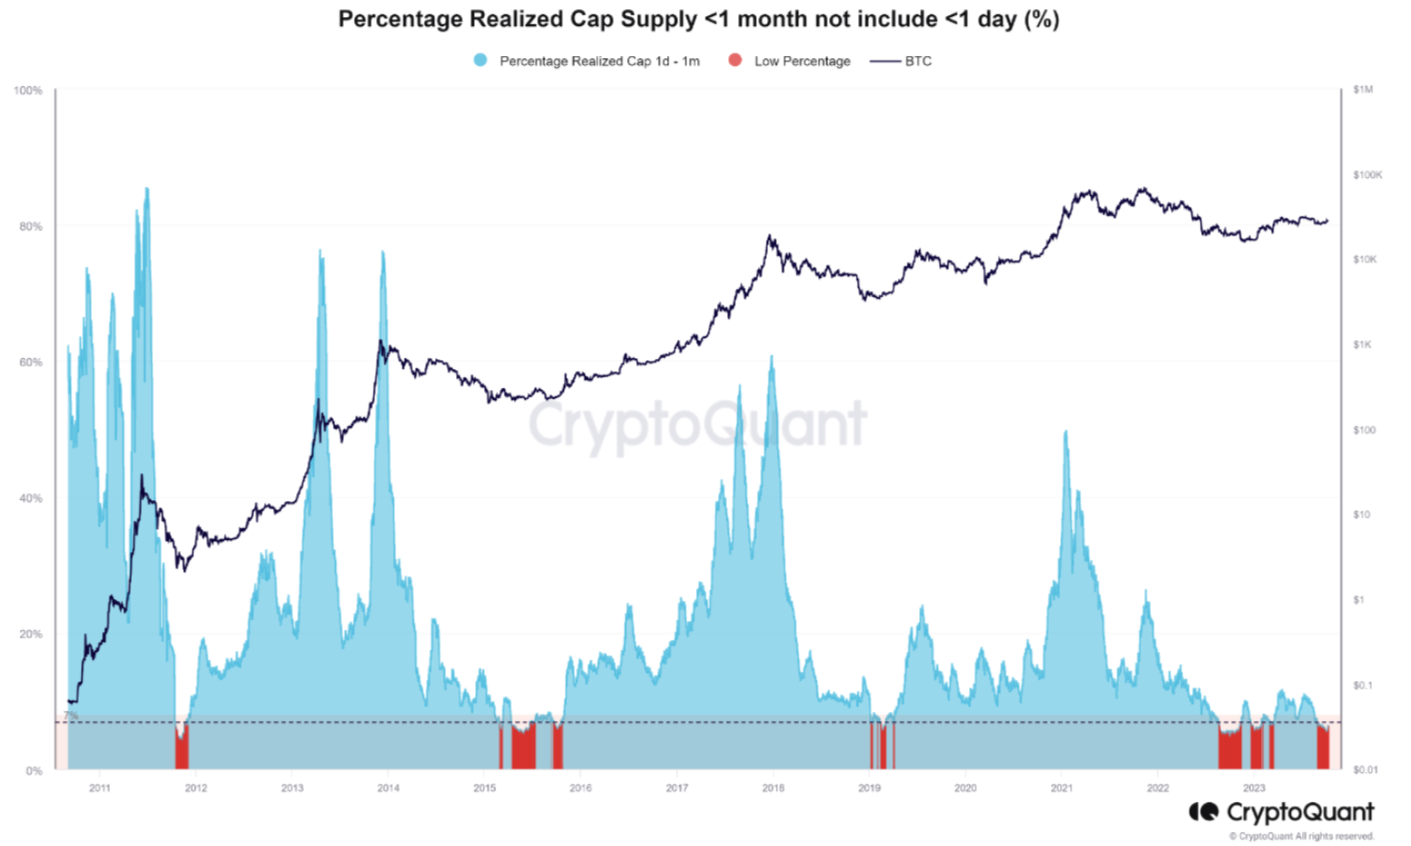 Bitcoin 1D-1M cohort realized cap % chart (screenshot). Source: CryptoQuant